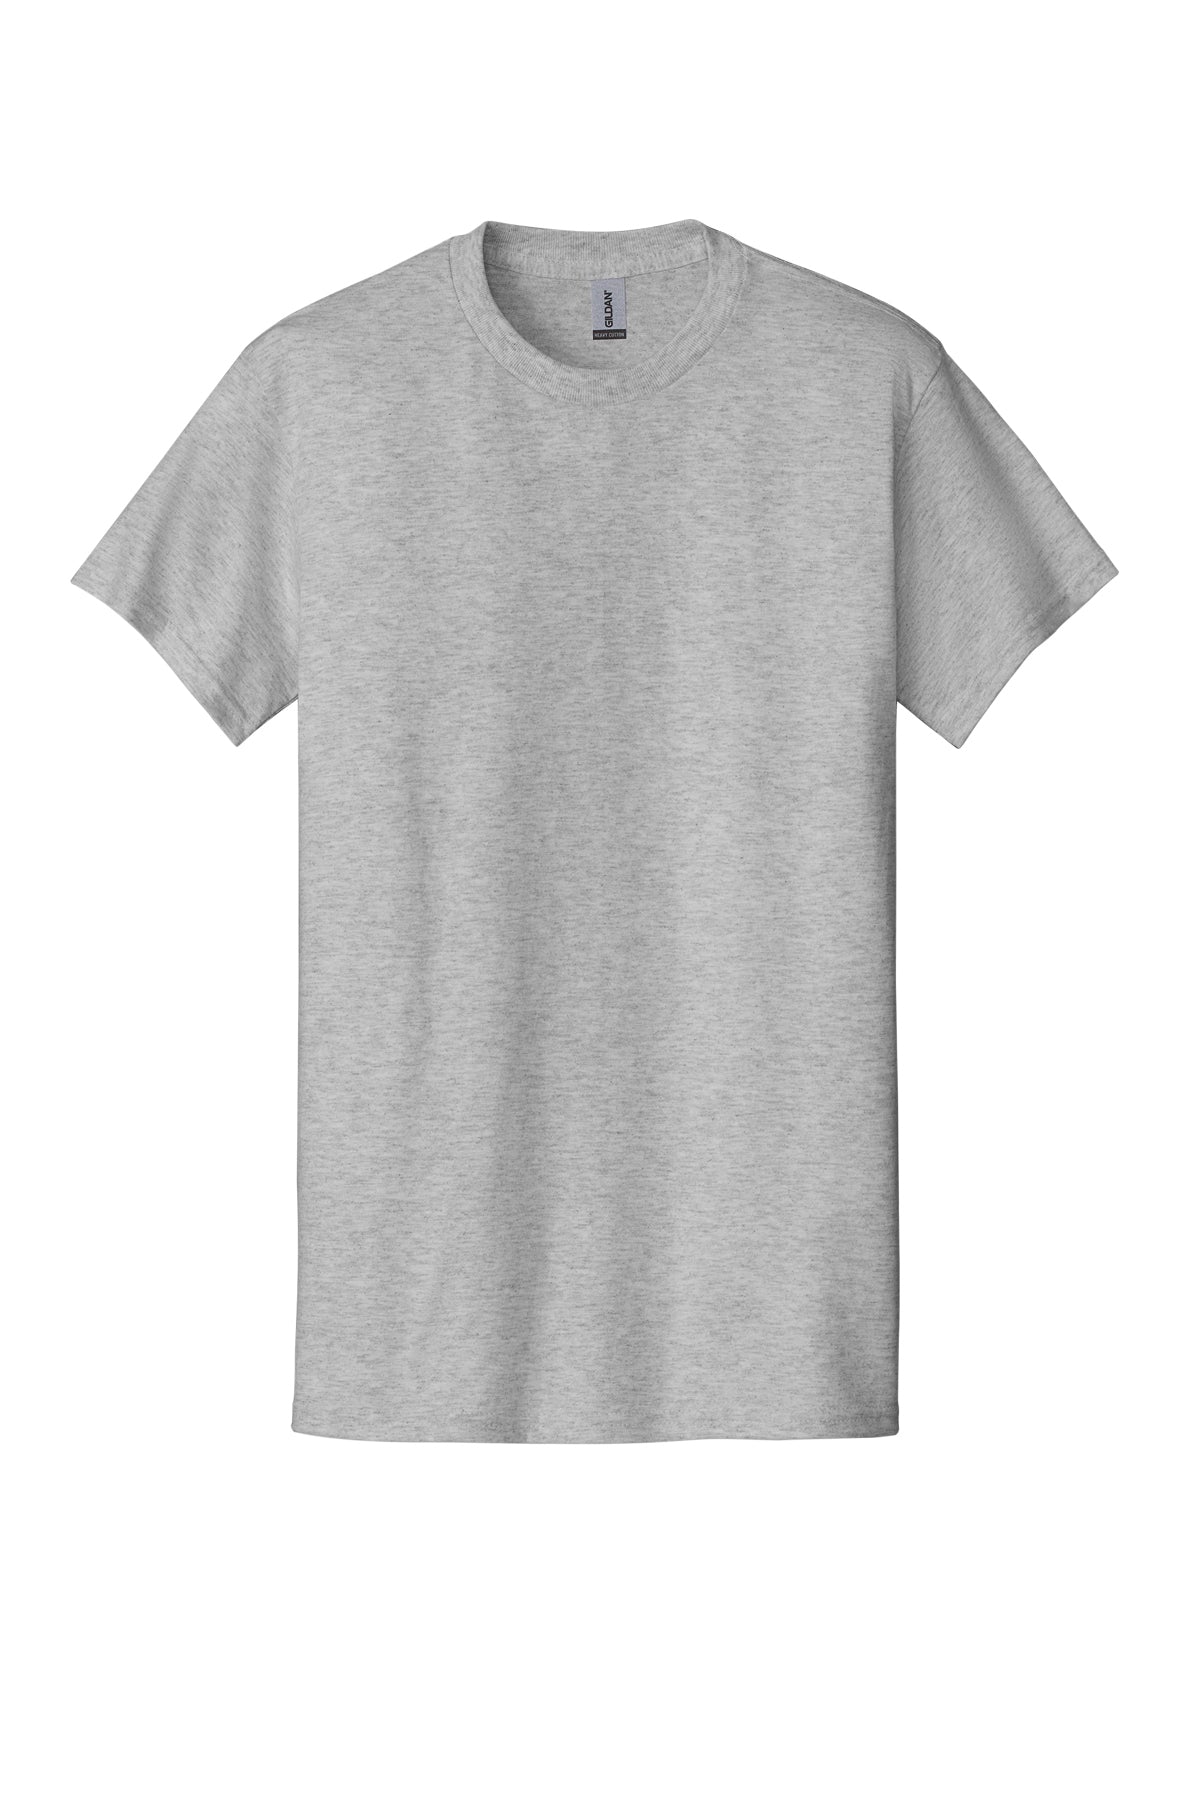 Gildan Mens/Unisex S/S Shirts Sport Grey